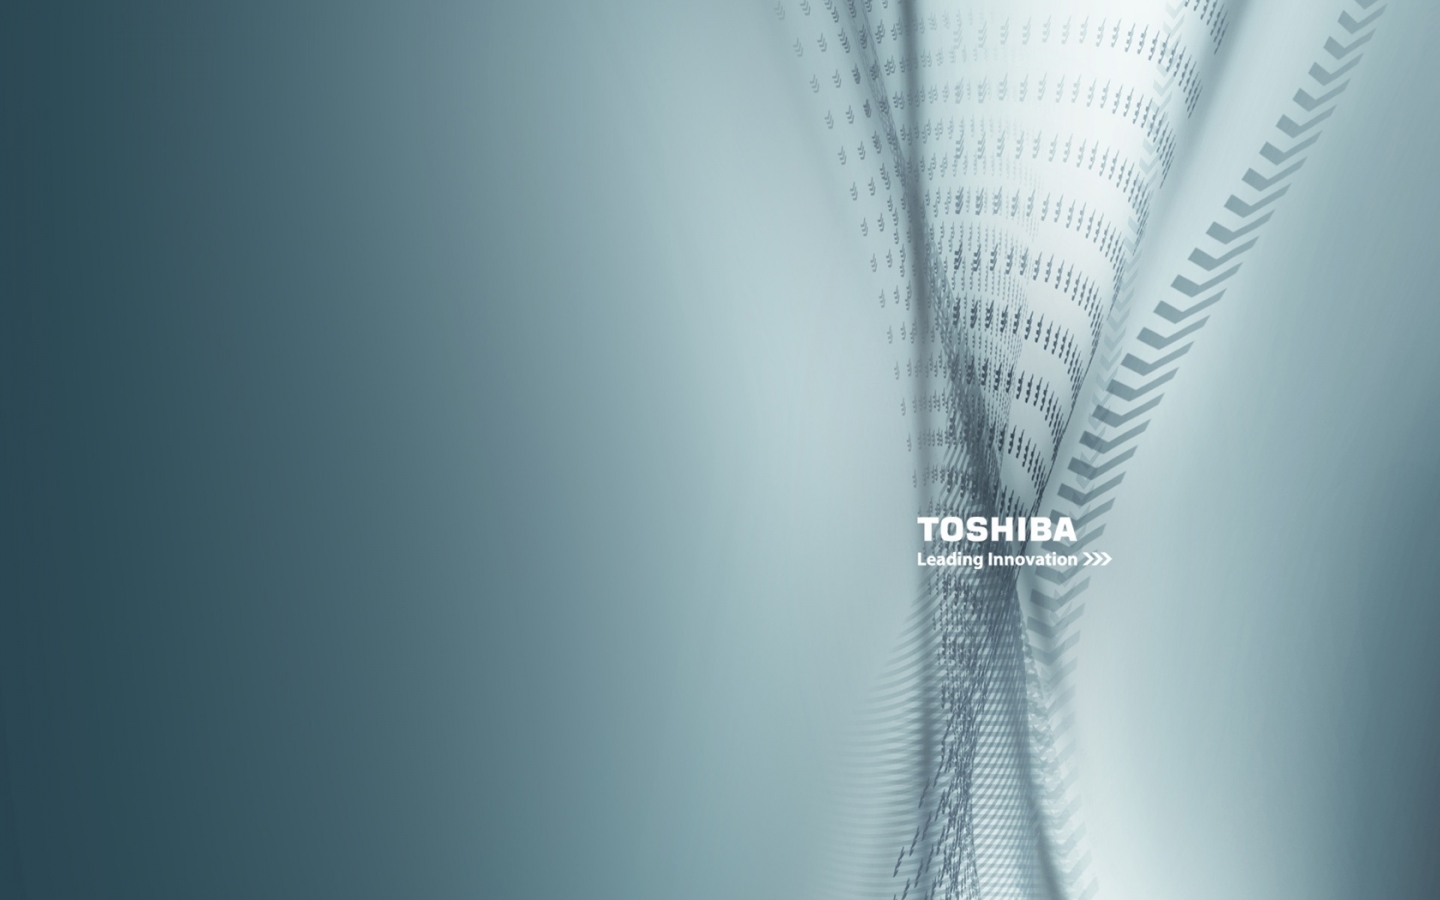 Toshiba Innovation for 1440 x 900 widescreen resolution